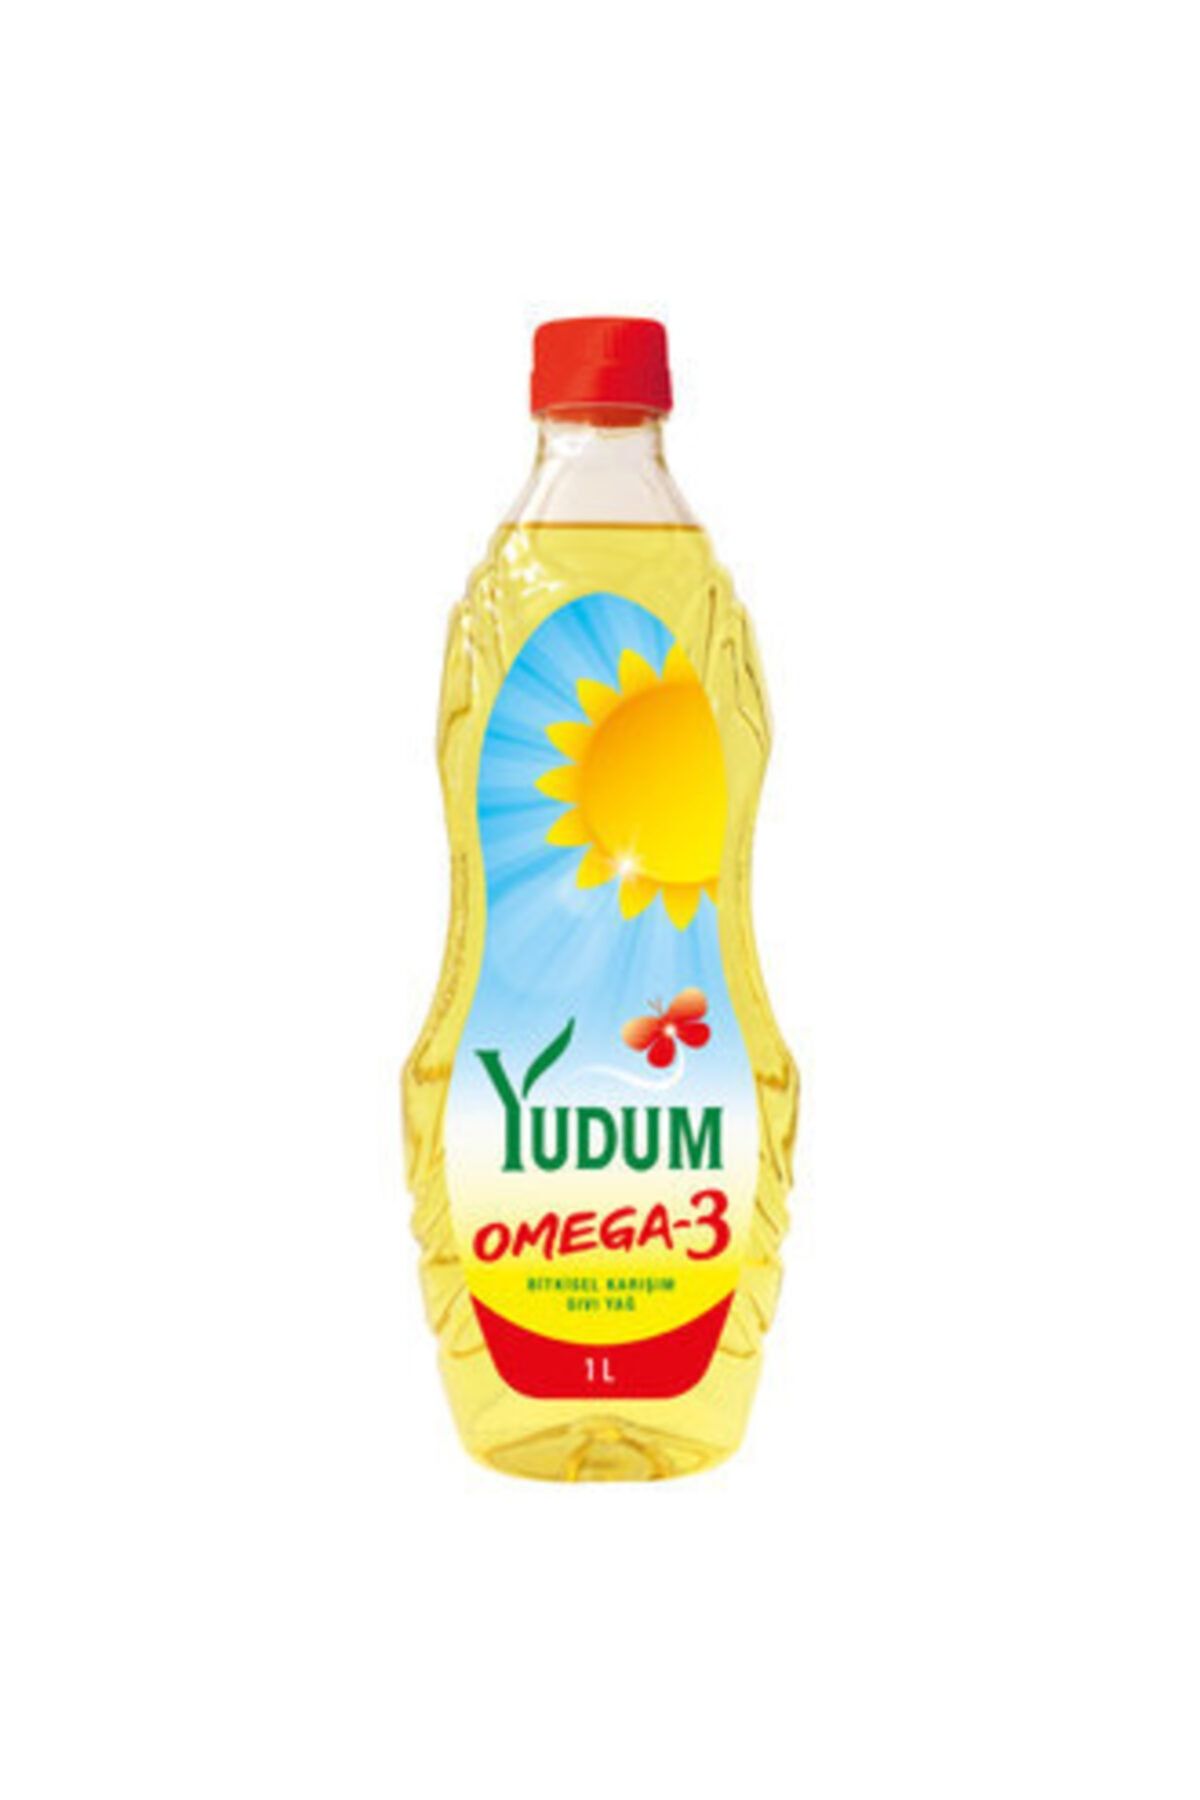 Yudum Omega-3 Bitkisel Karışım Sıvı Yağ 1 lt